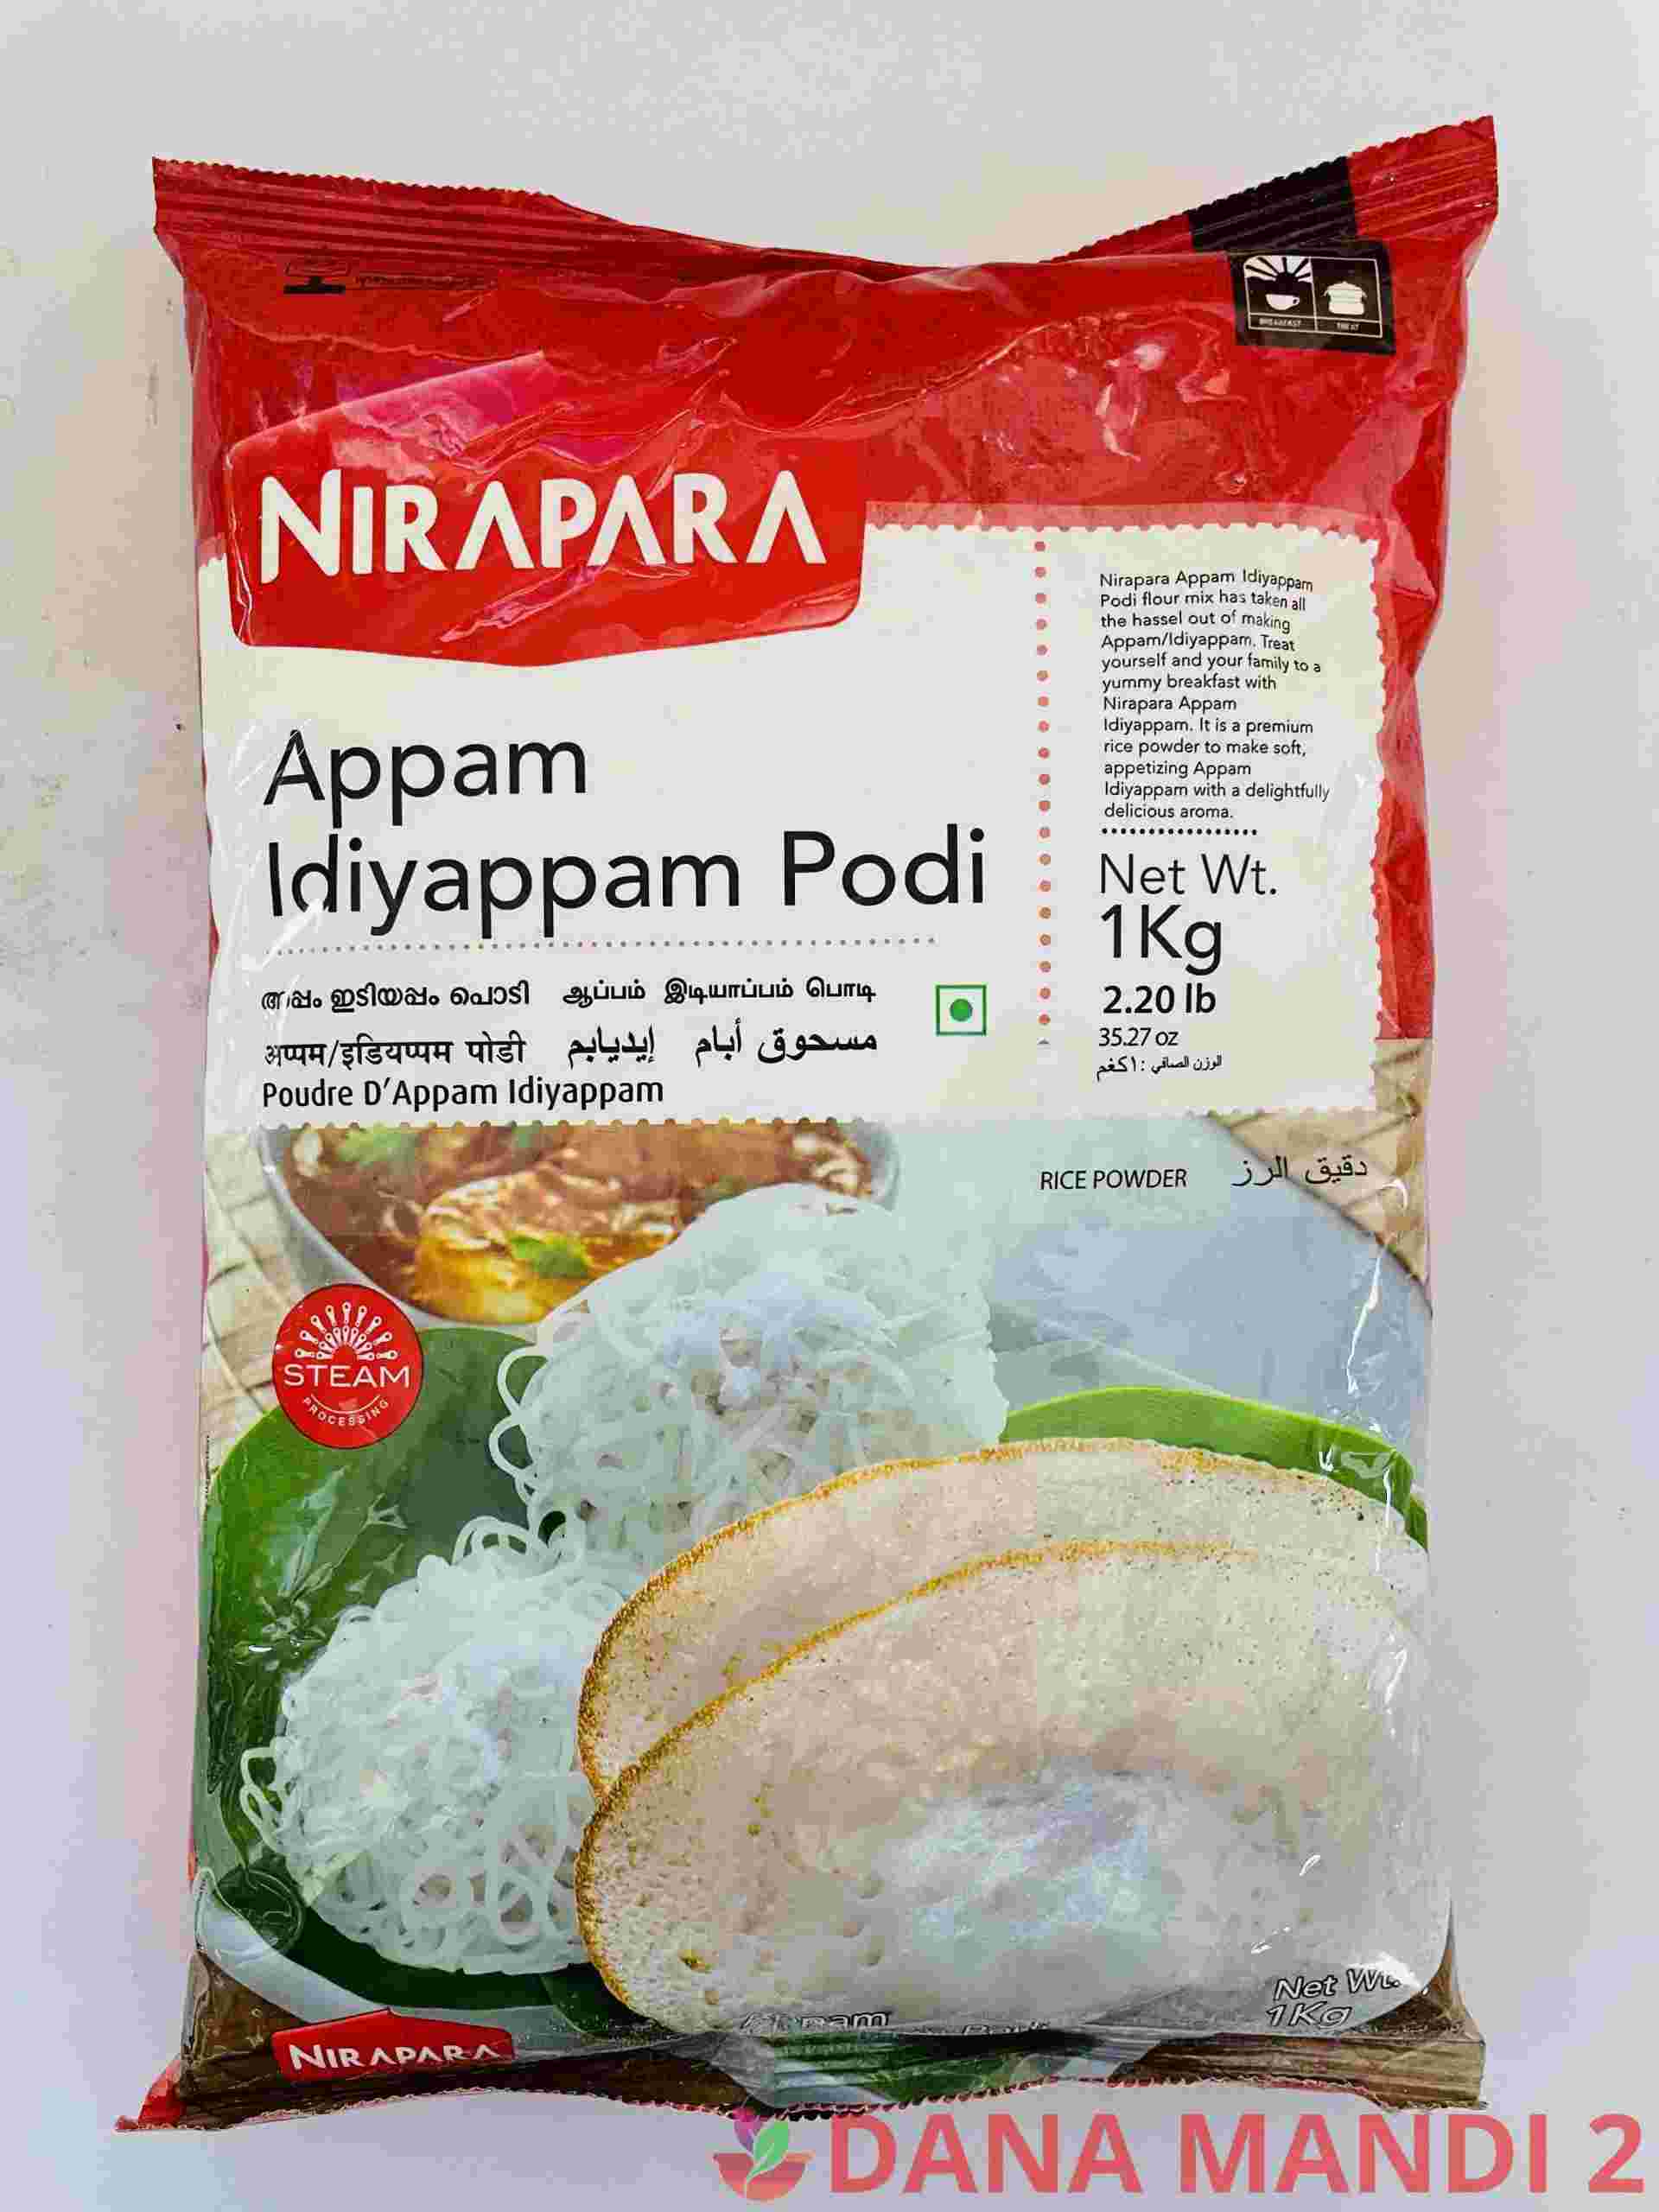 Nirapara Appam Idiyappam Podi